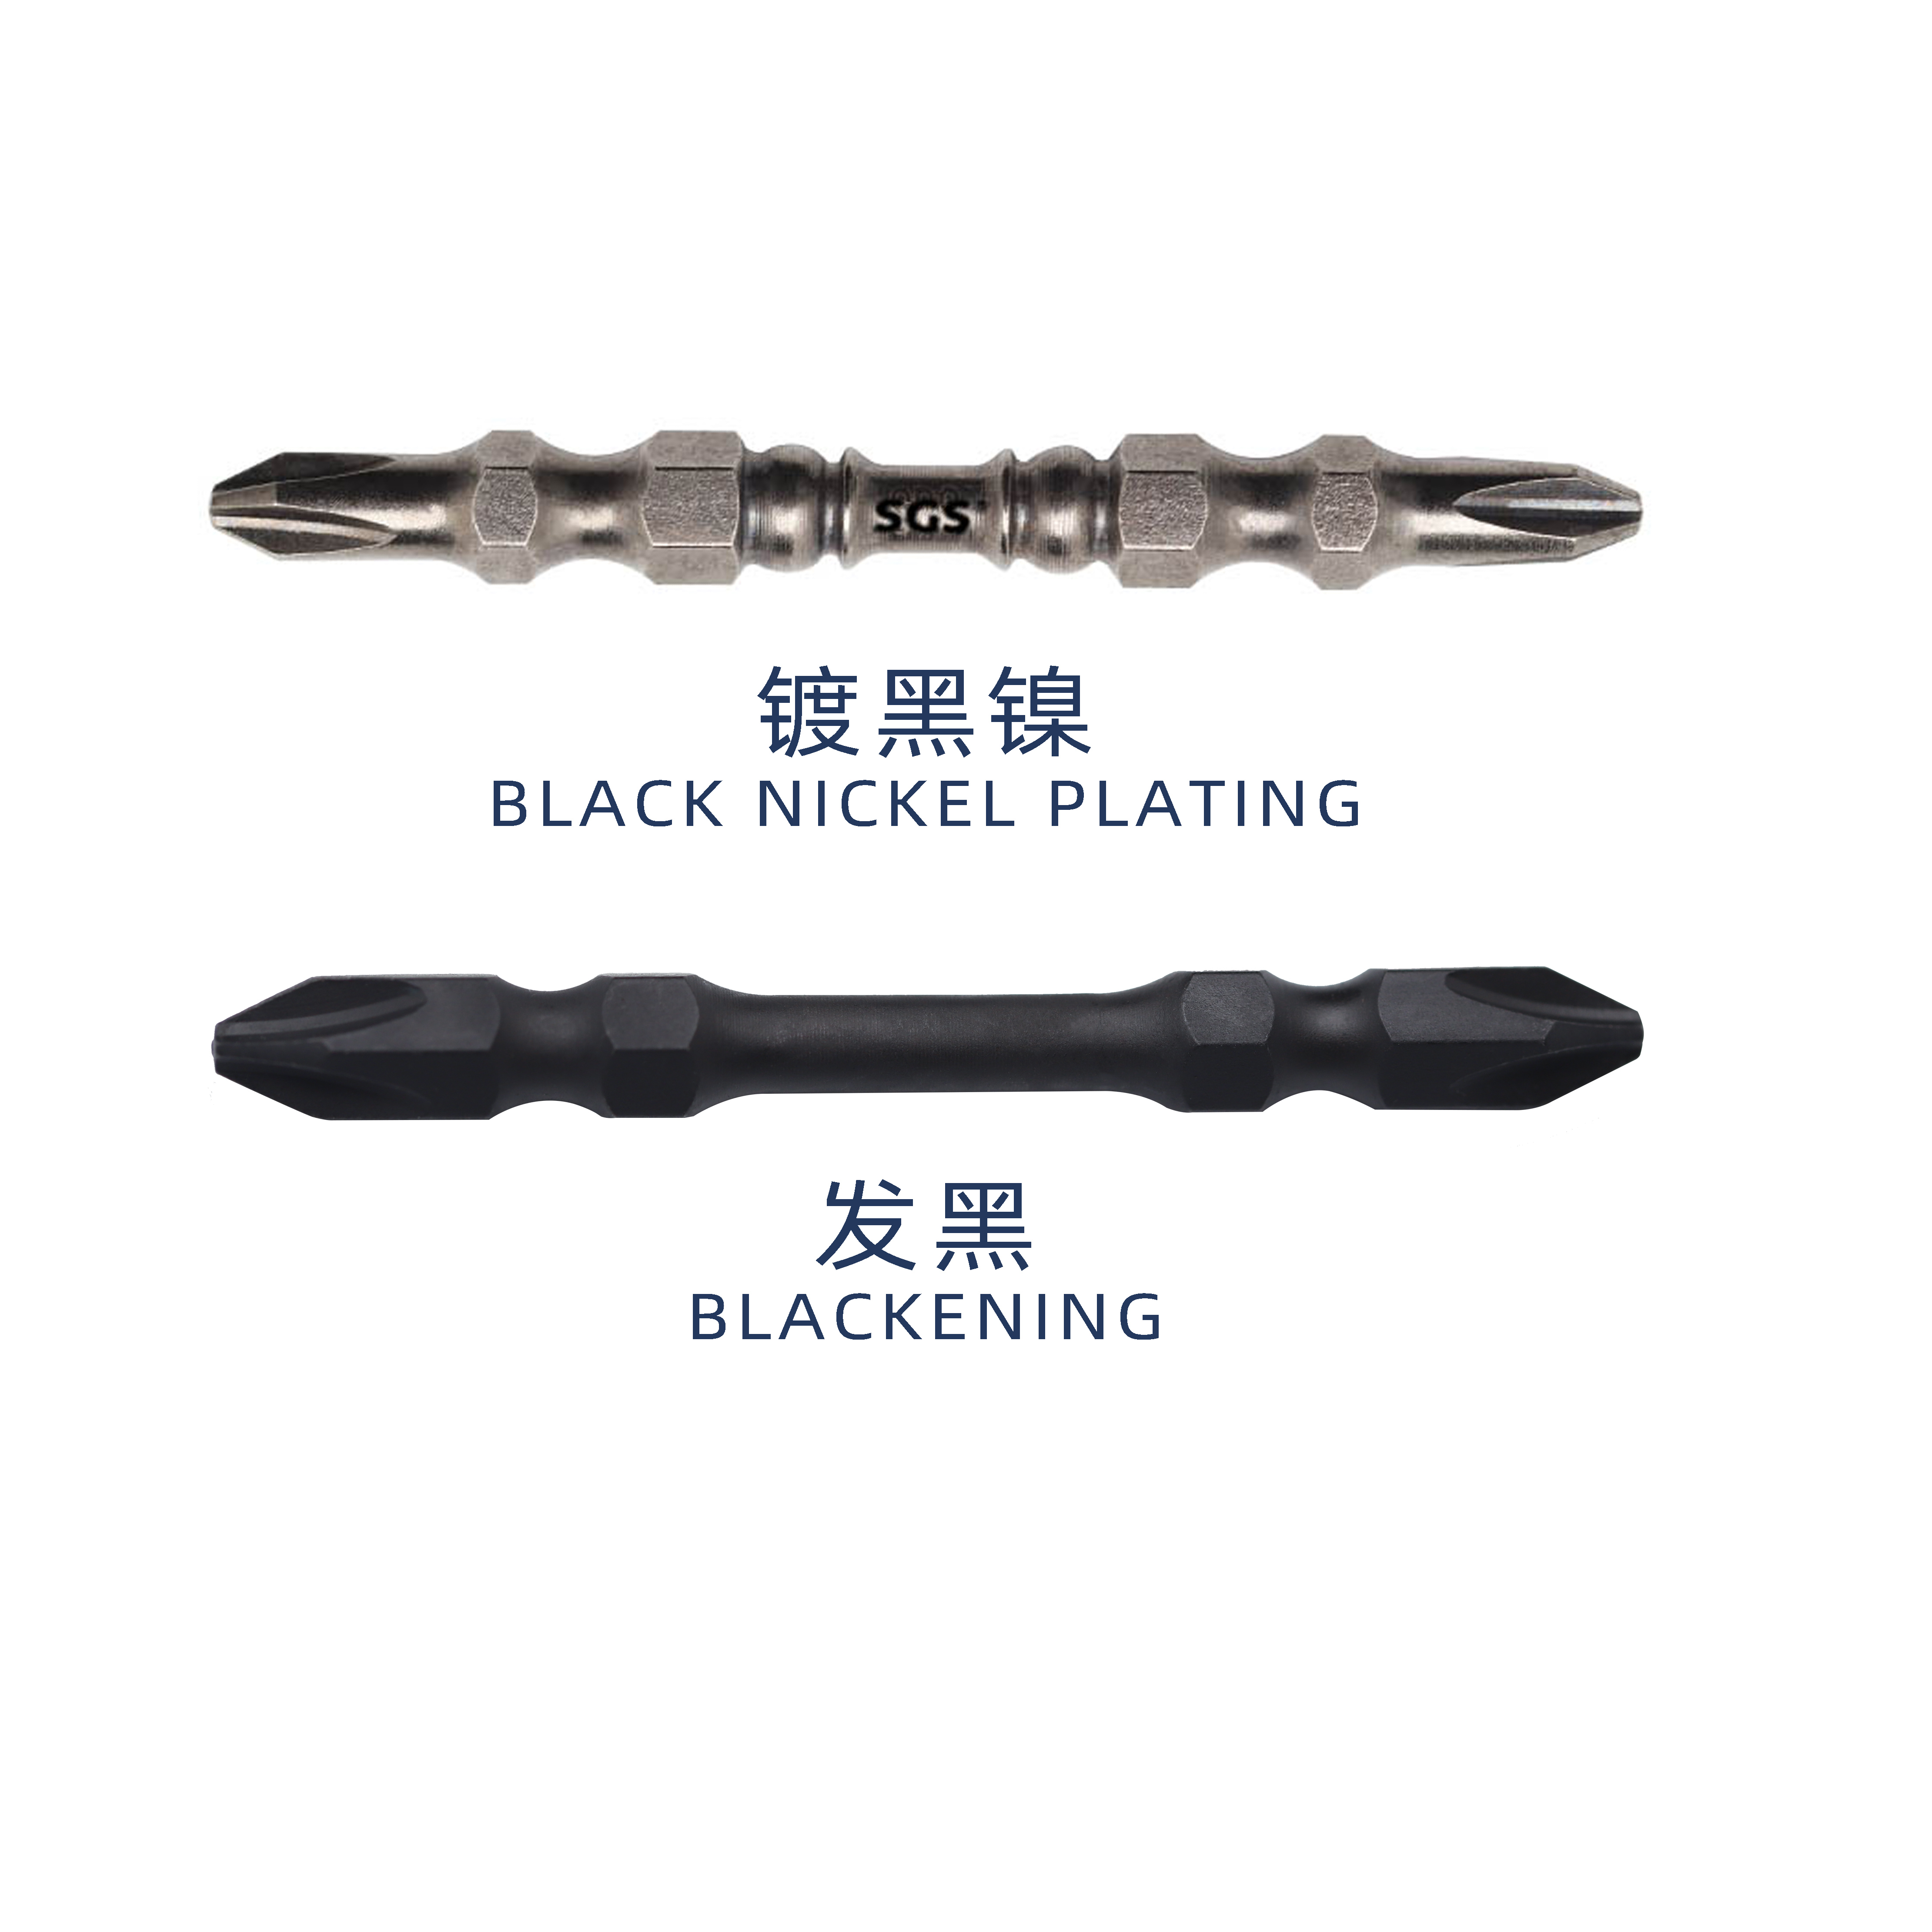 Black nickel plating&Blackening